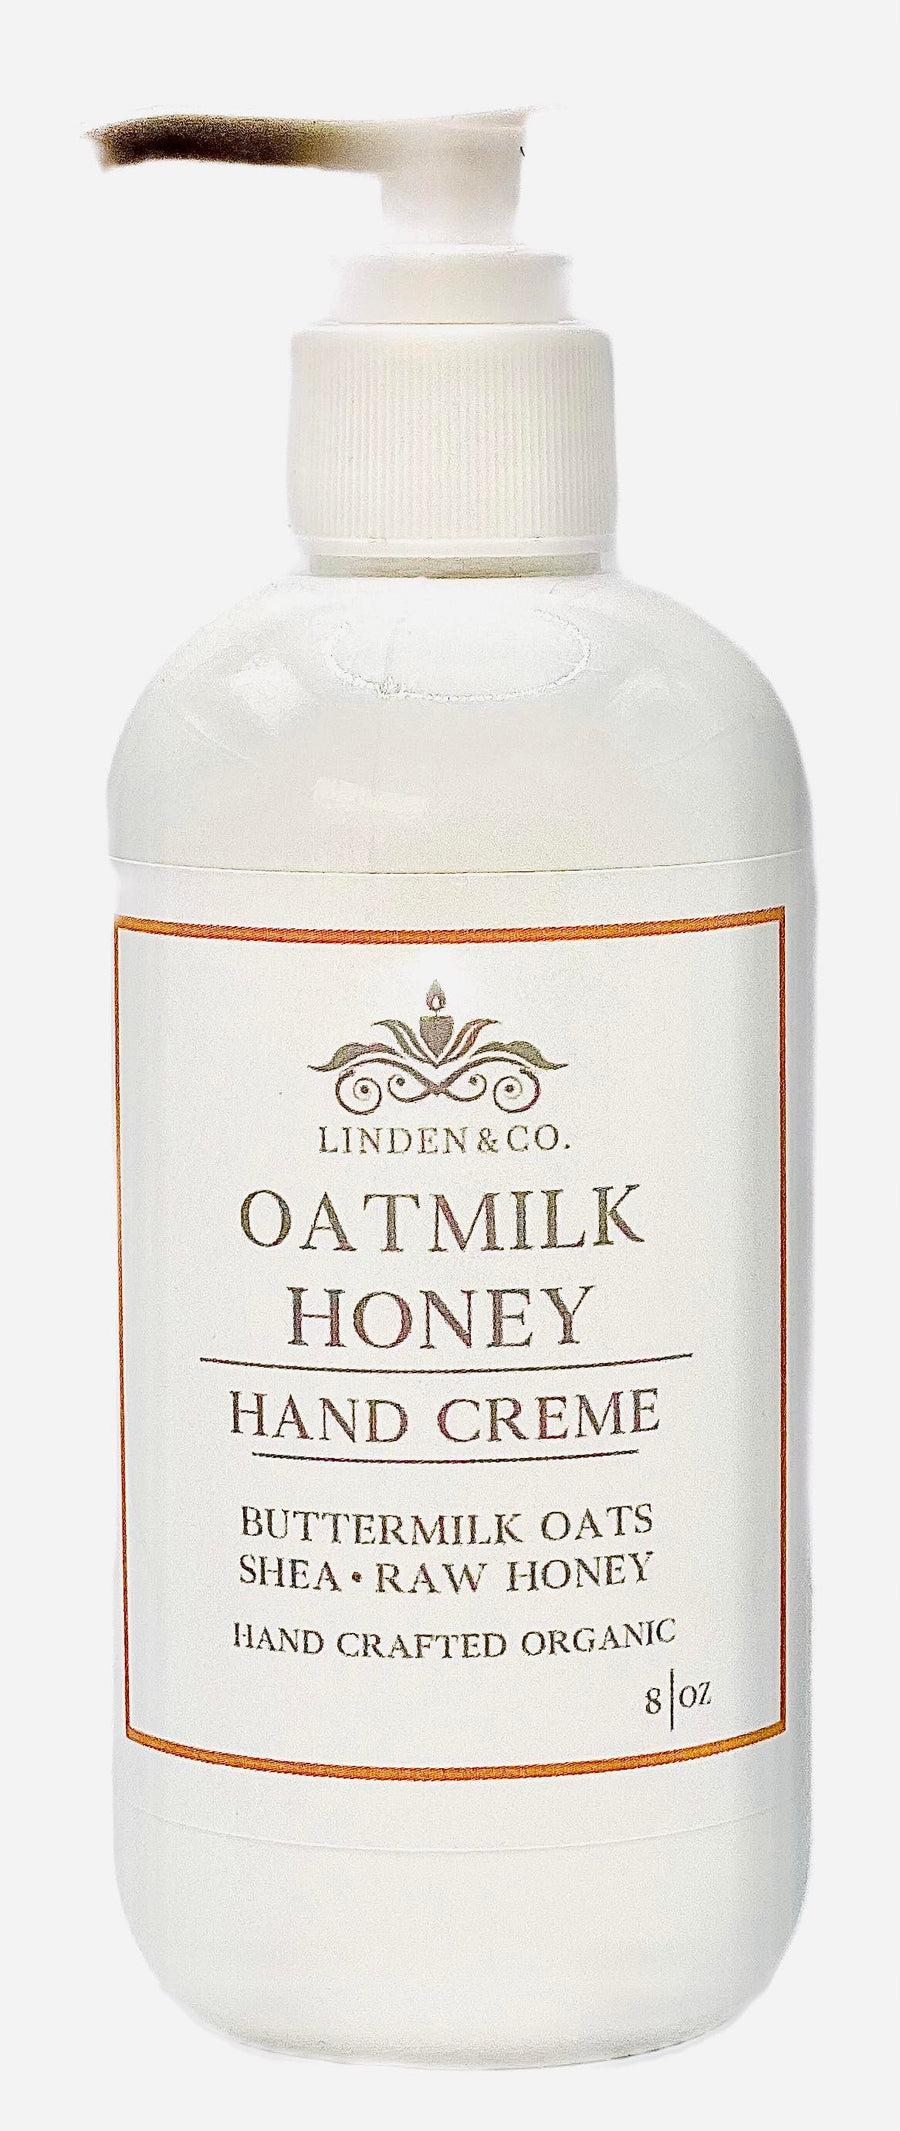 Oatmilk Honey Hand Creme